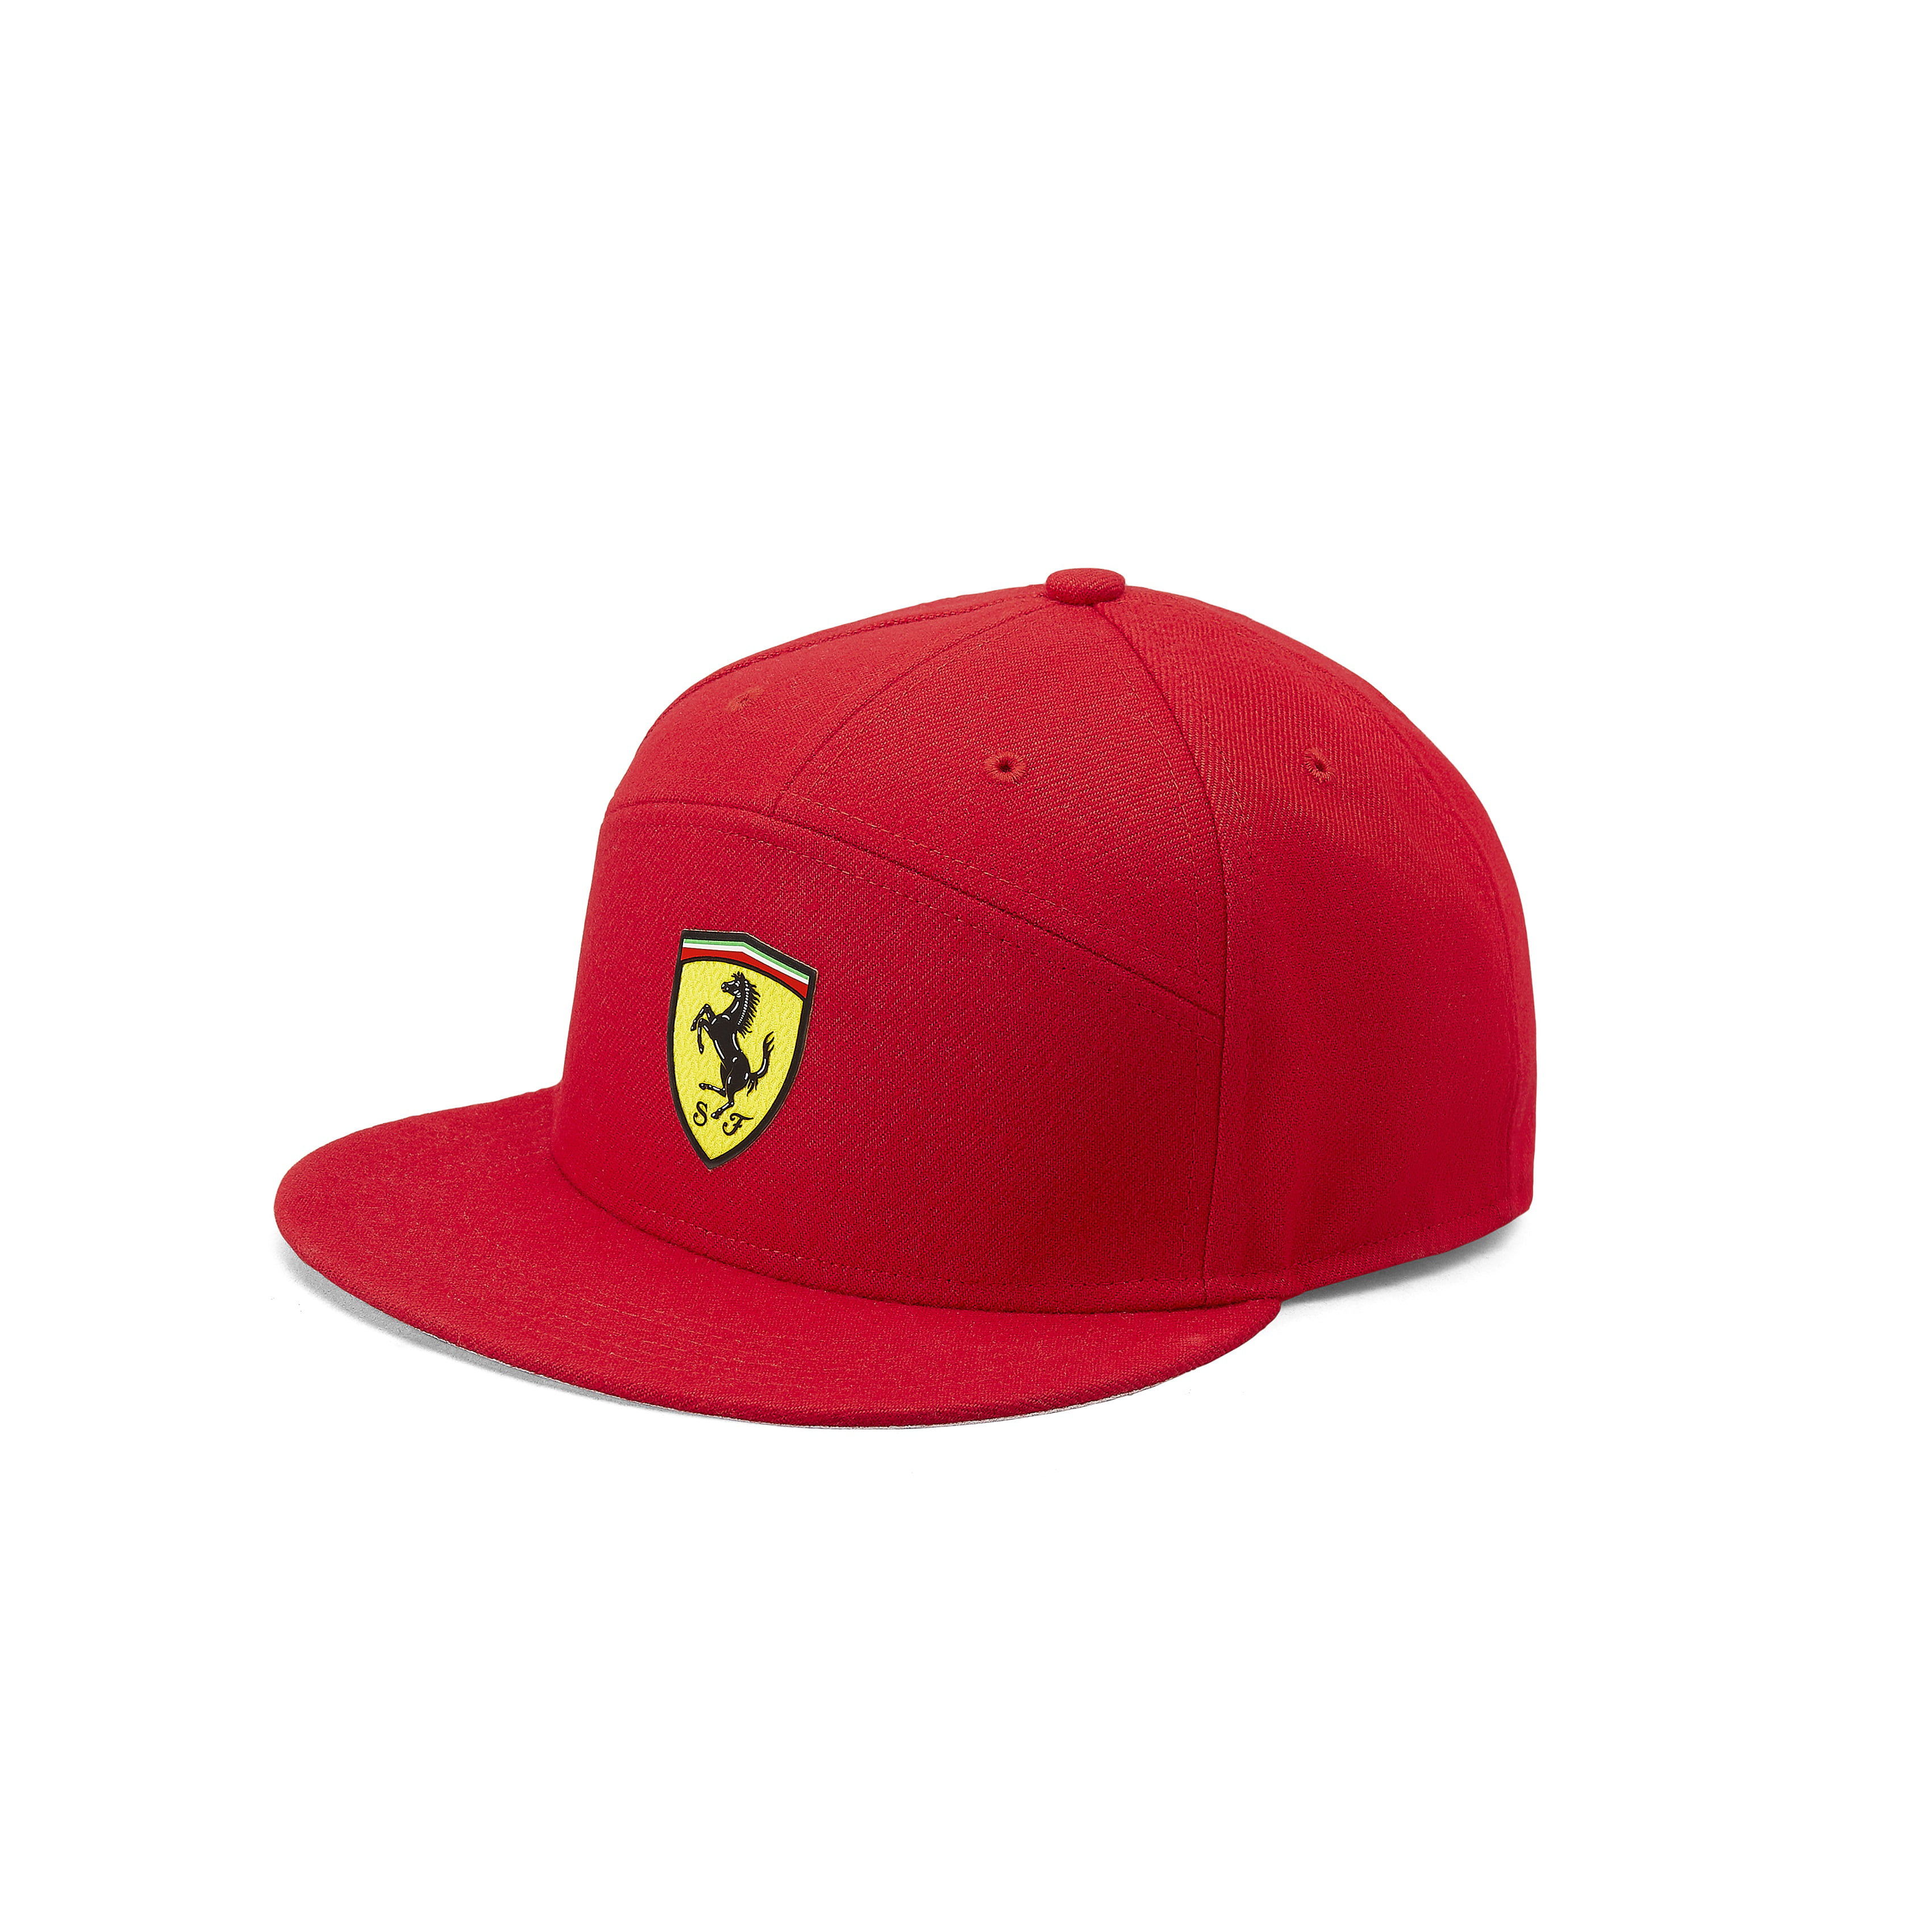 Scuderia Ferrari F1 Red Flat Brim Hat - Walmart.com - Walmart.com